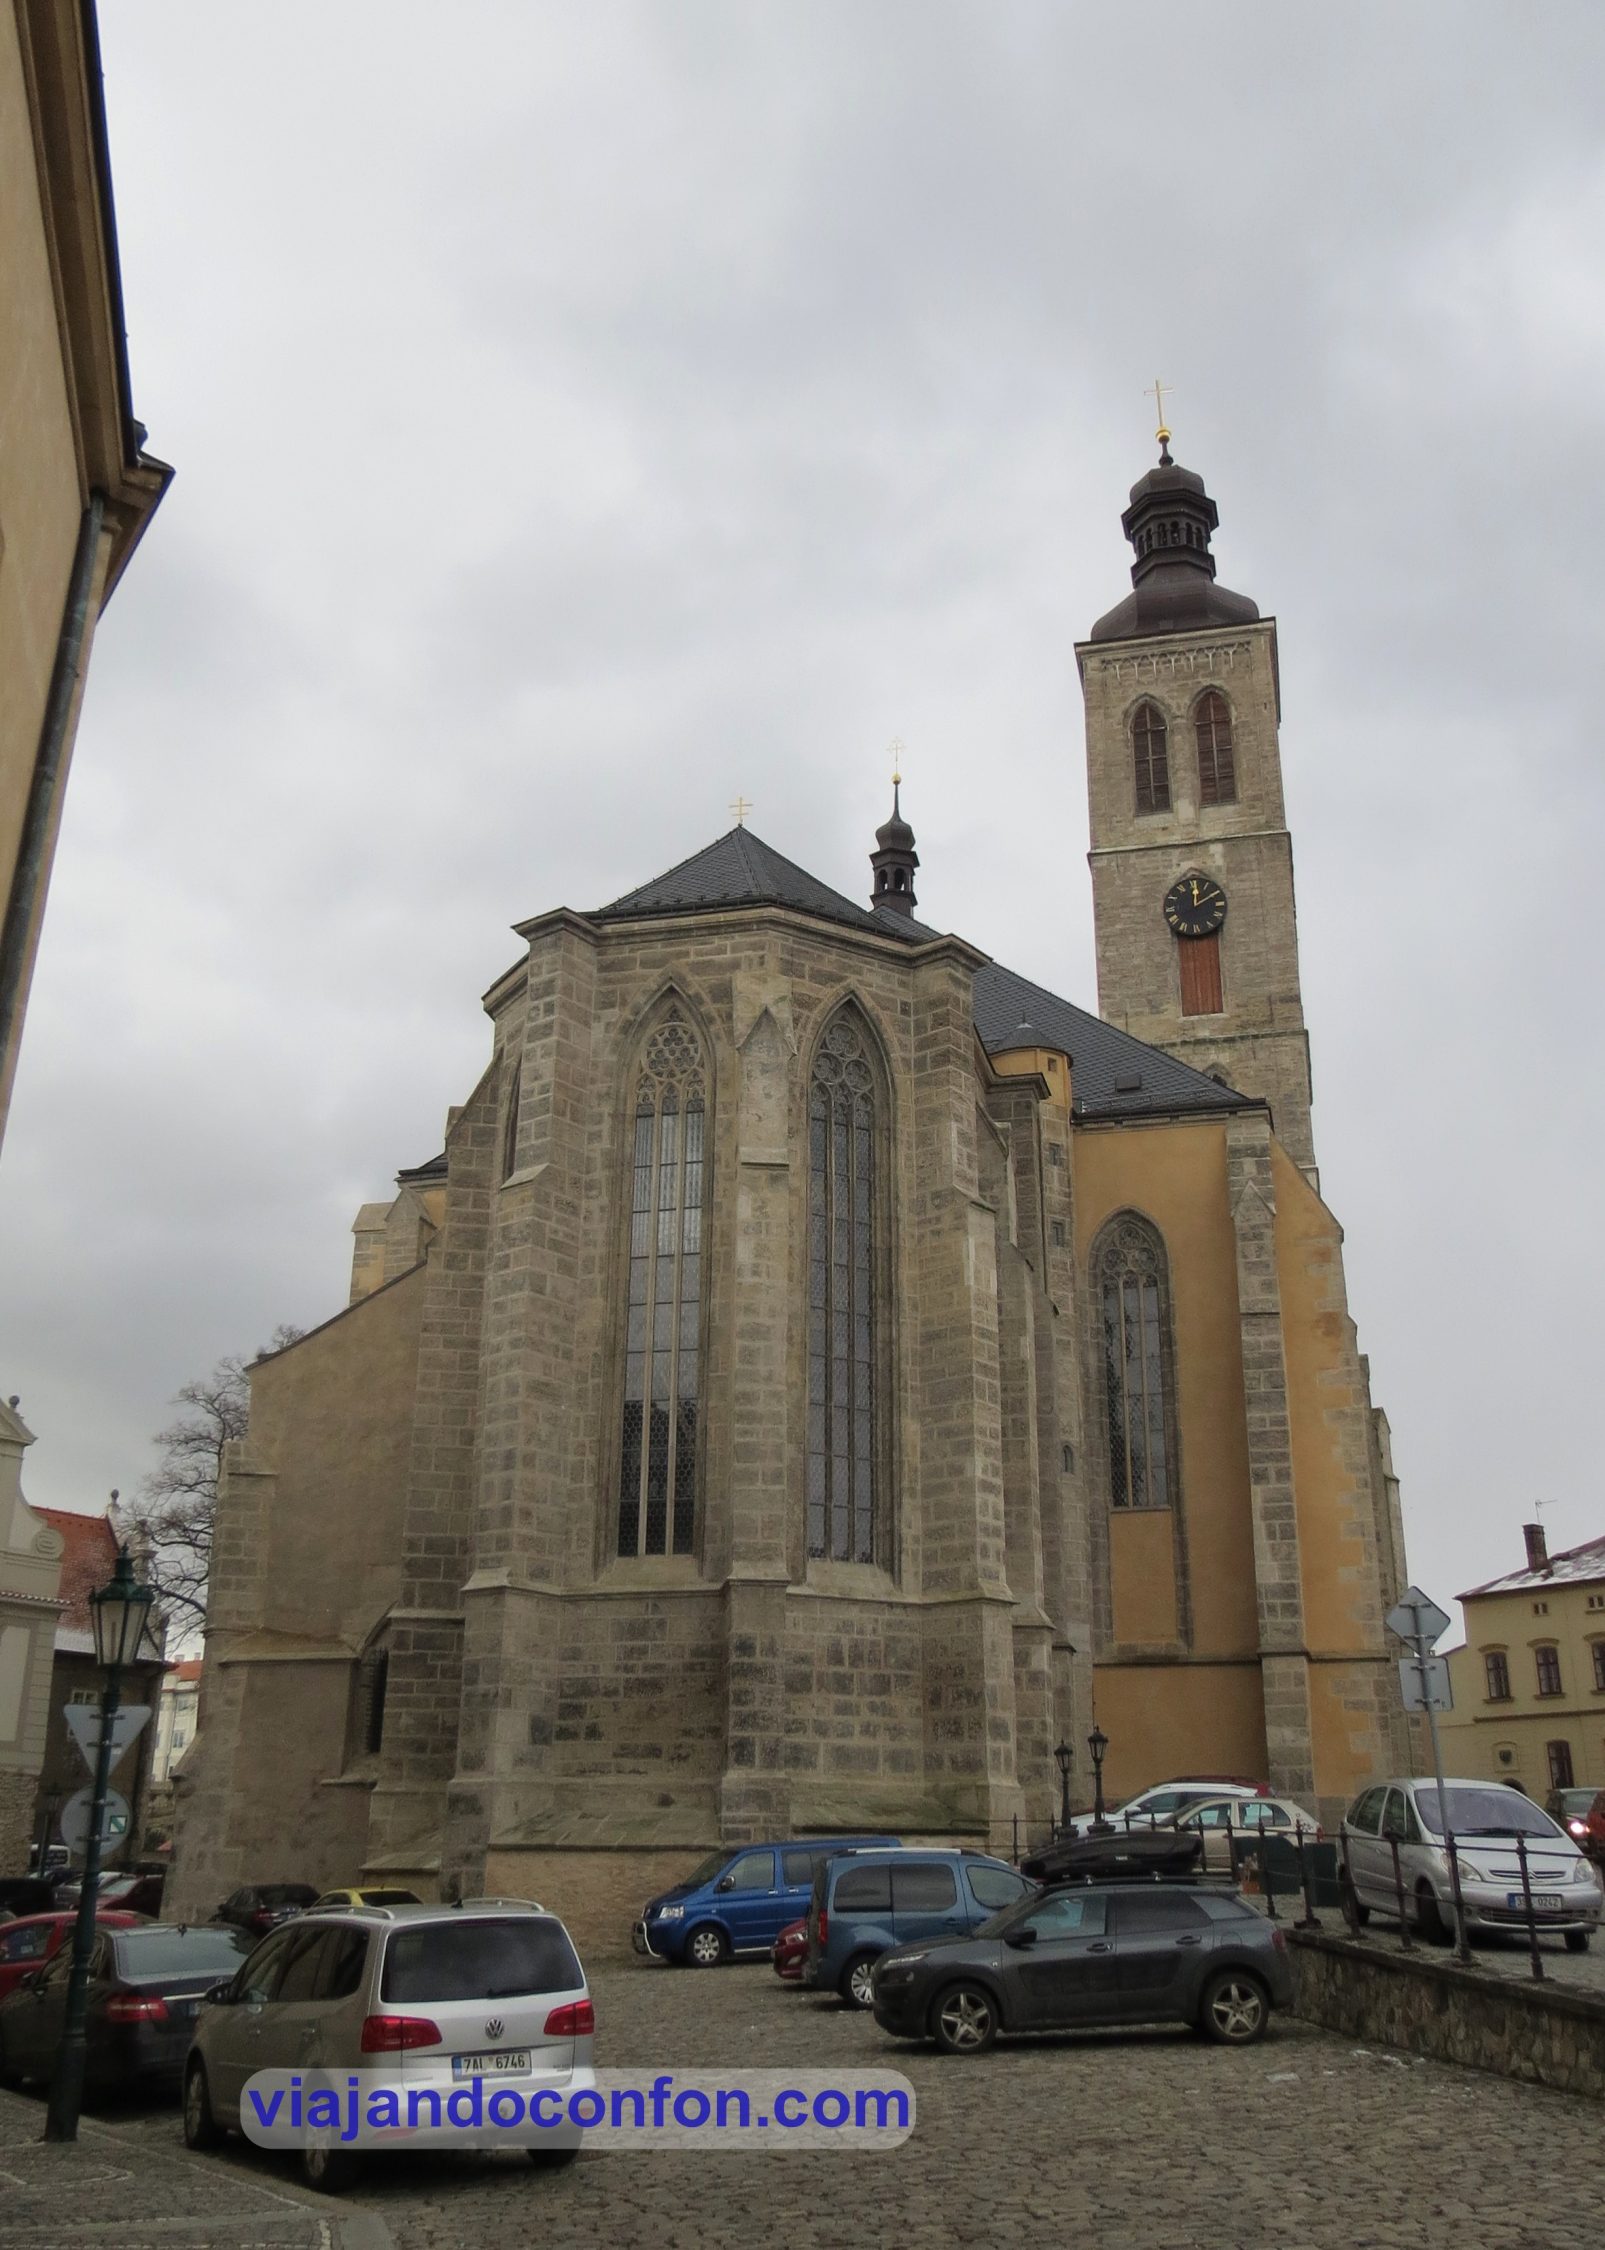 Kostel sv. Jakuba, la iglesia de San Jaime.
Kutná Hora